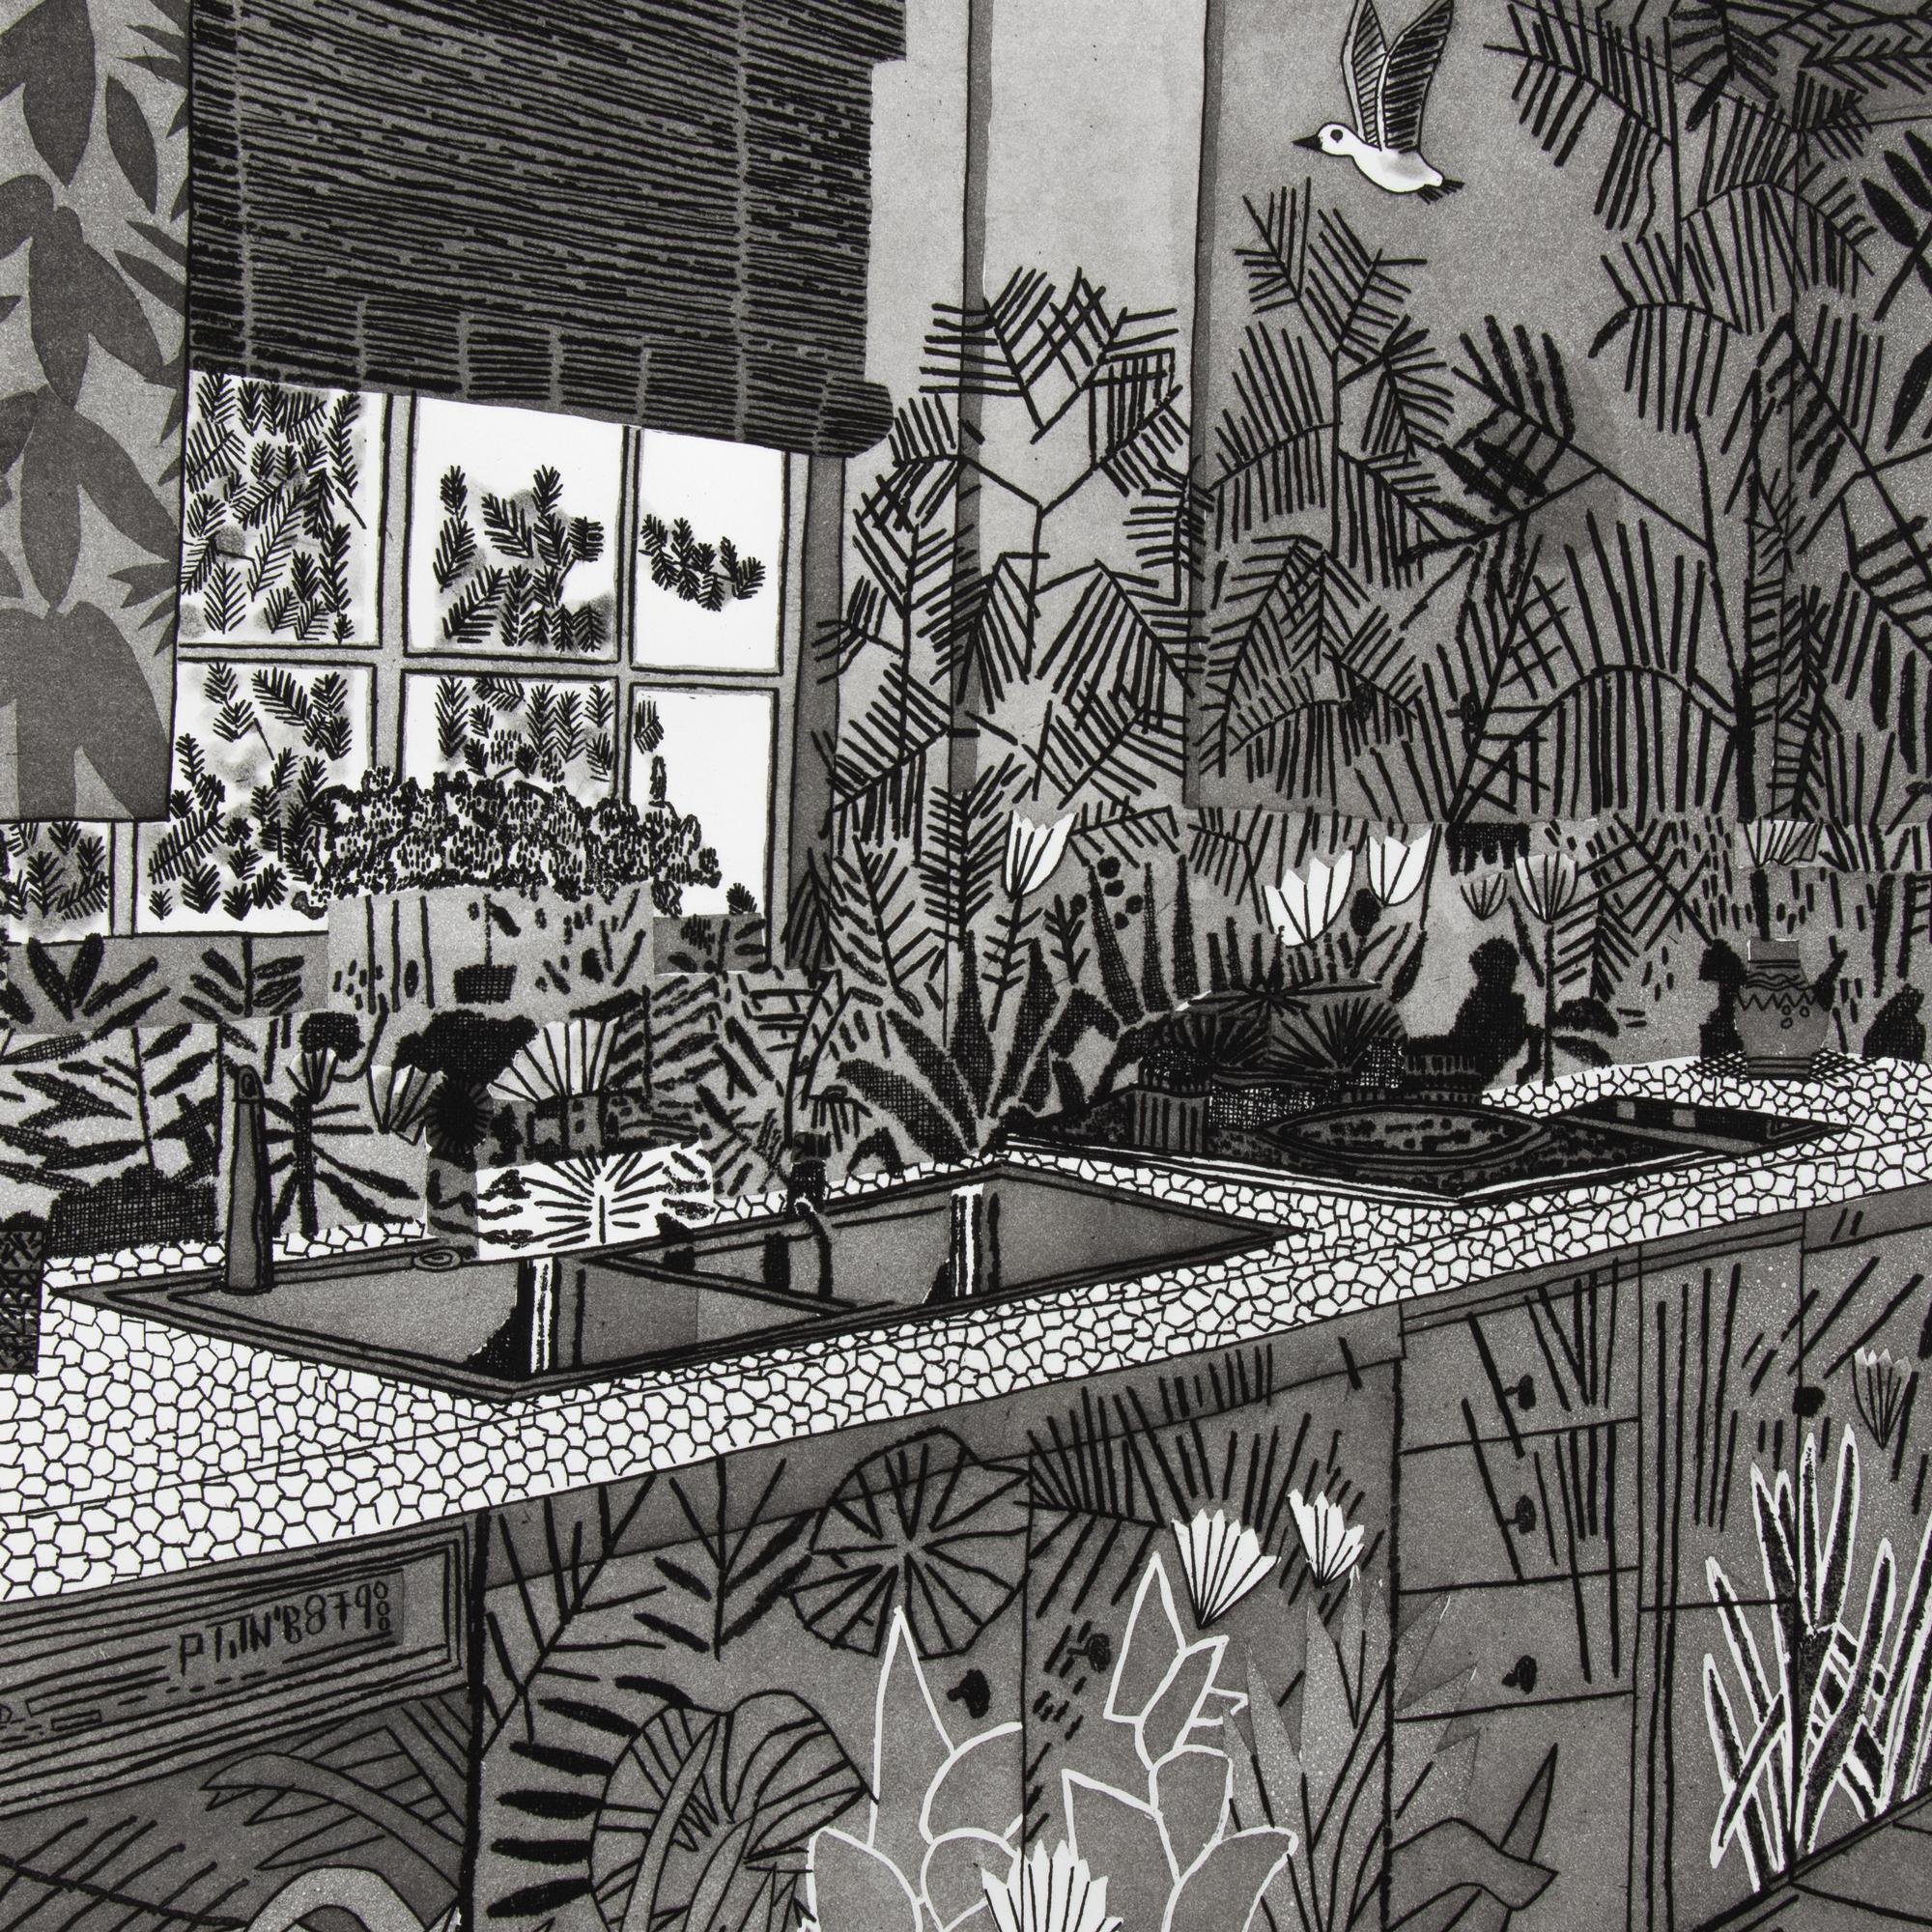 Jonas Wood, Jungle Kitchen: Signed Print, Contemporary Art, Etching, Aquatint 1